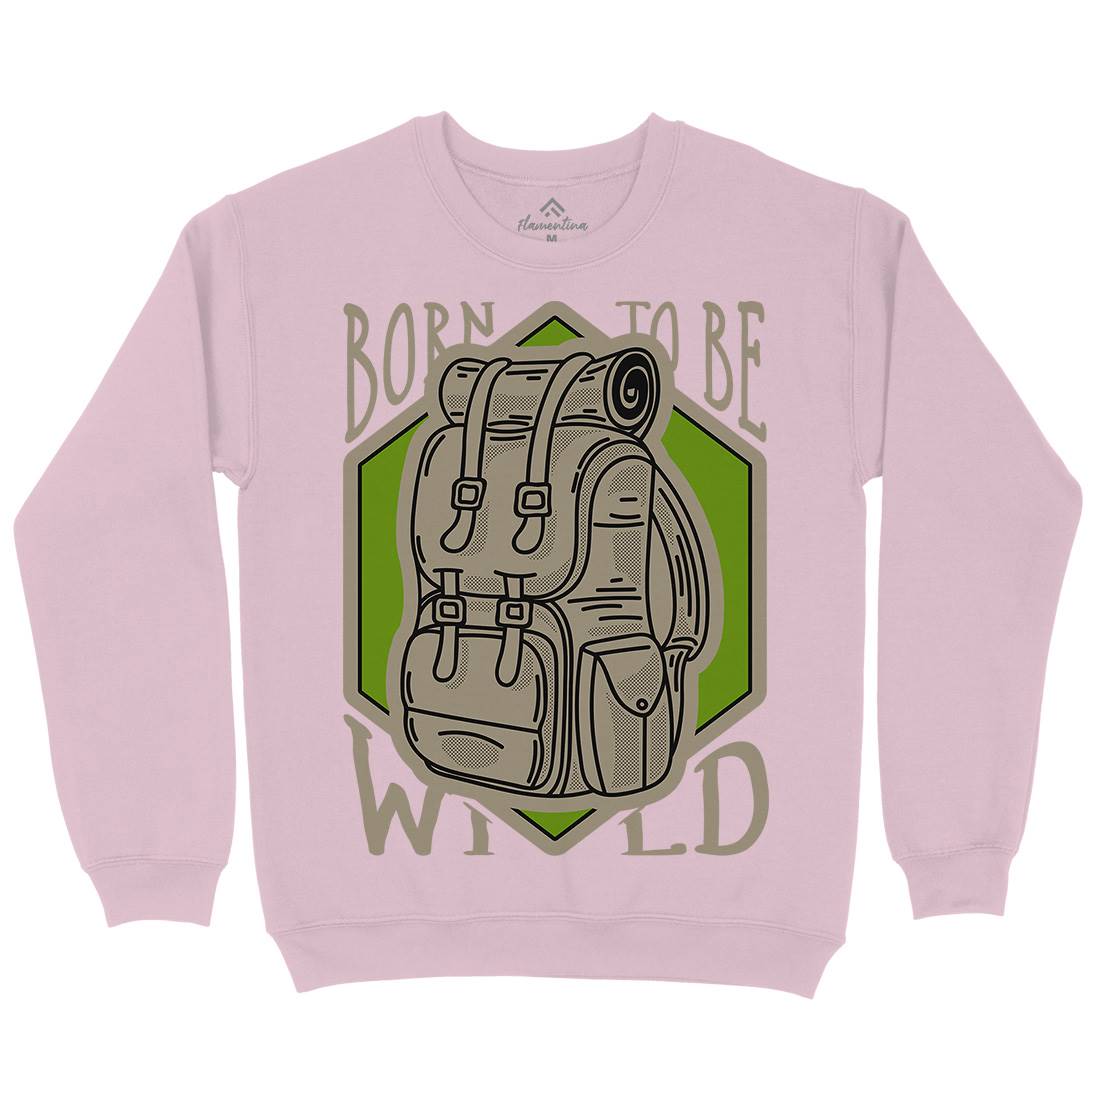 Born To Be Wild Kids Crew Neck Sweatshirt Nature D912